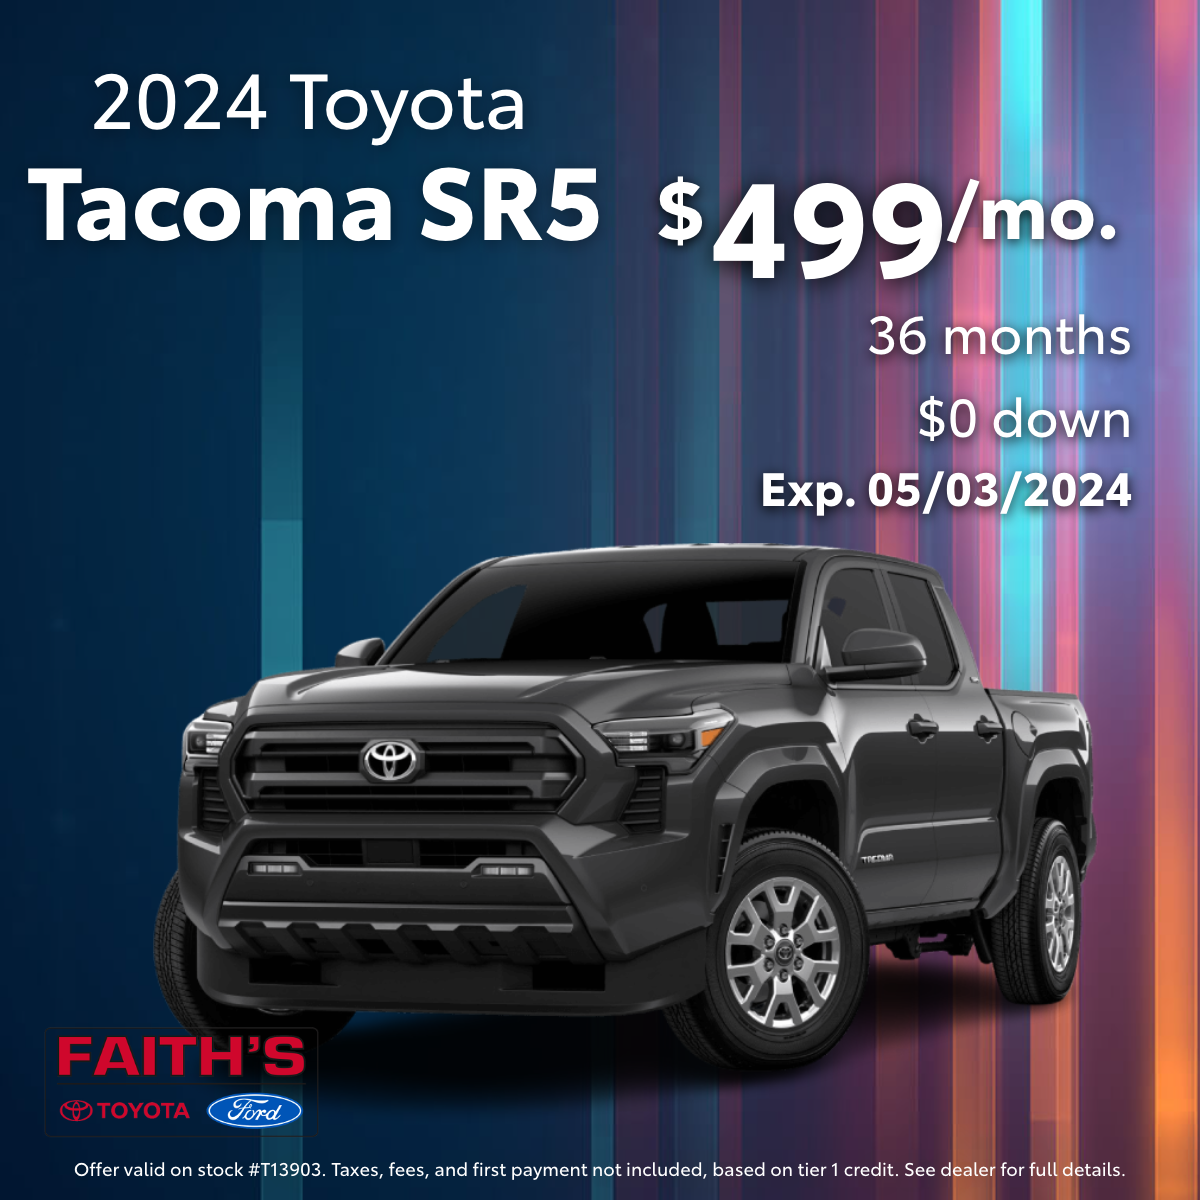 2024 Toyota Tacoma Lease Offer | Faiths Toyota